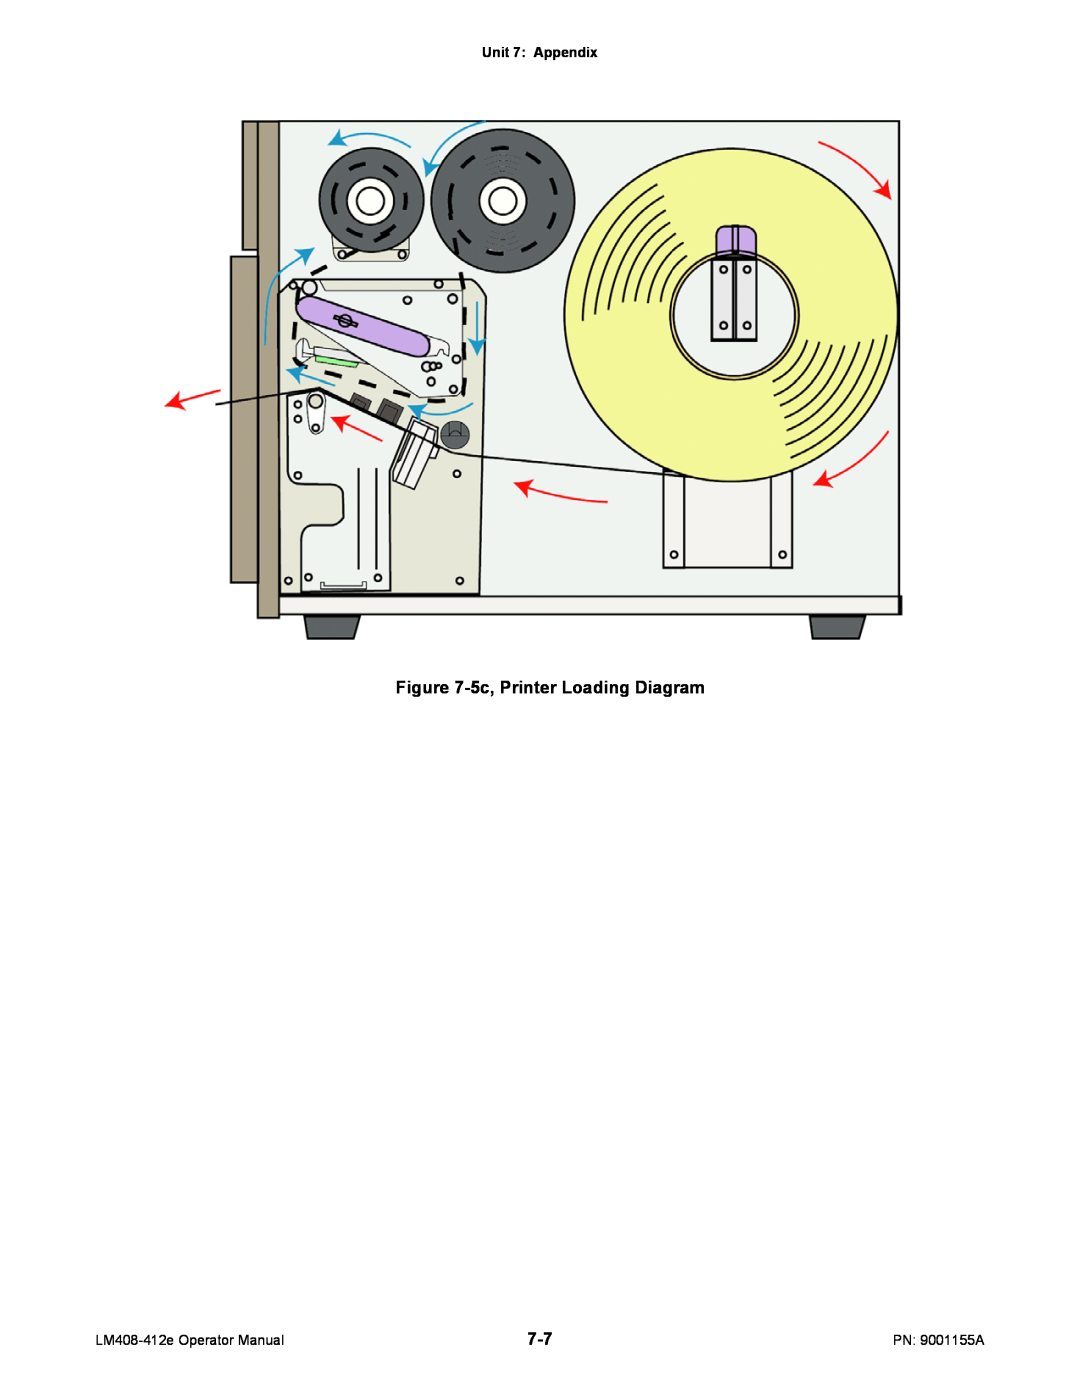 SATO LM408/412E manual 5c, Printer Loading Diagram, Unit 7 Appendix 